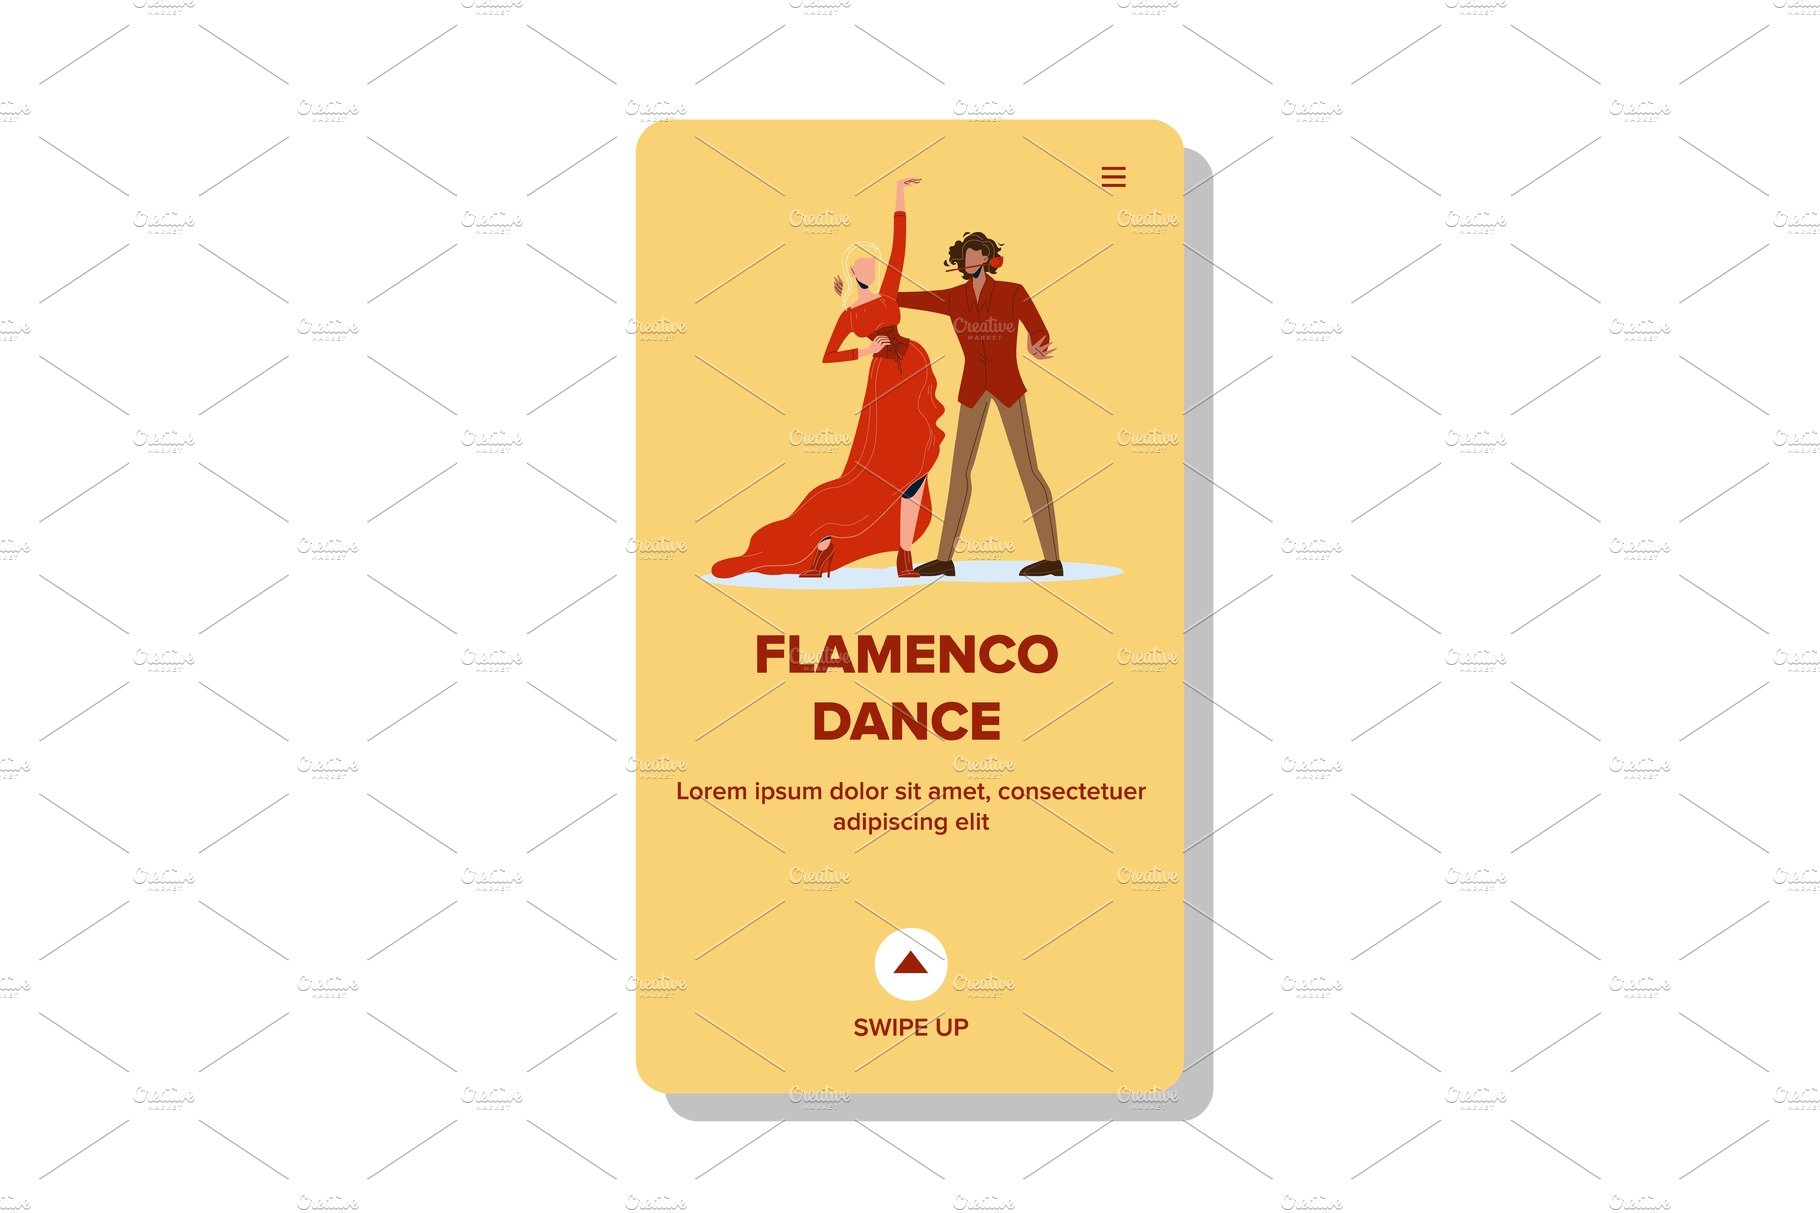 Flamenco Dance Dancing Couple Boy cover image.